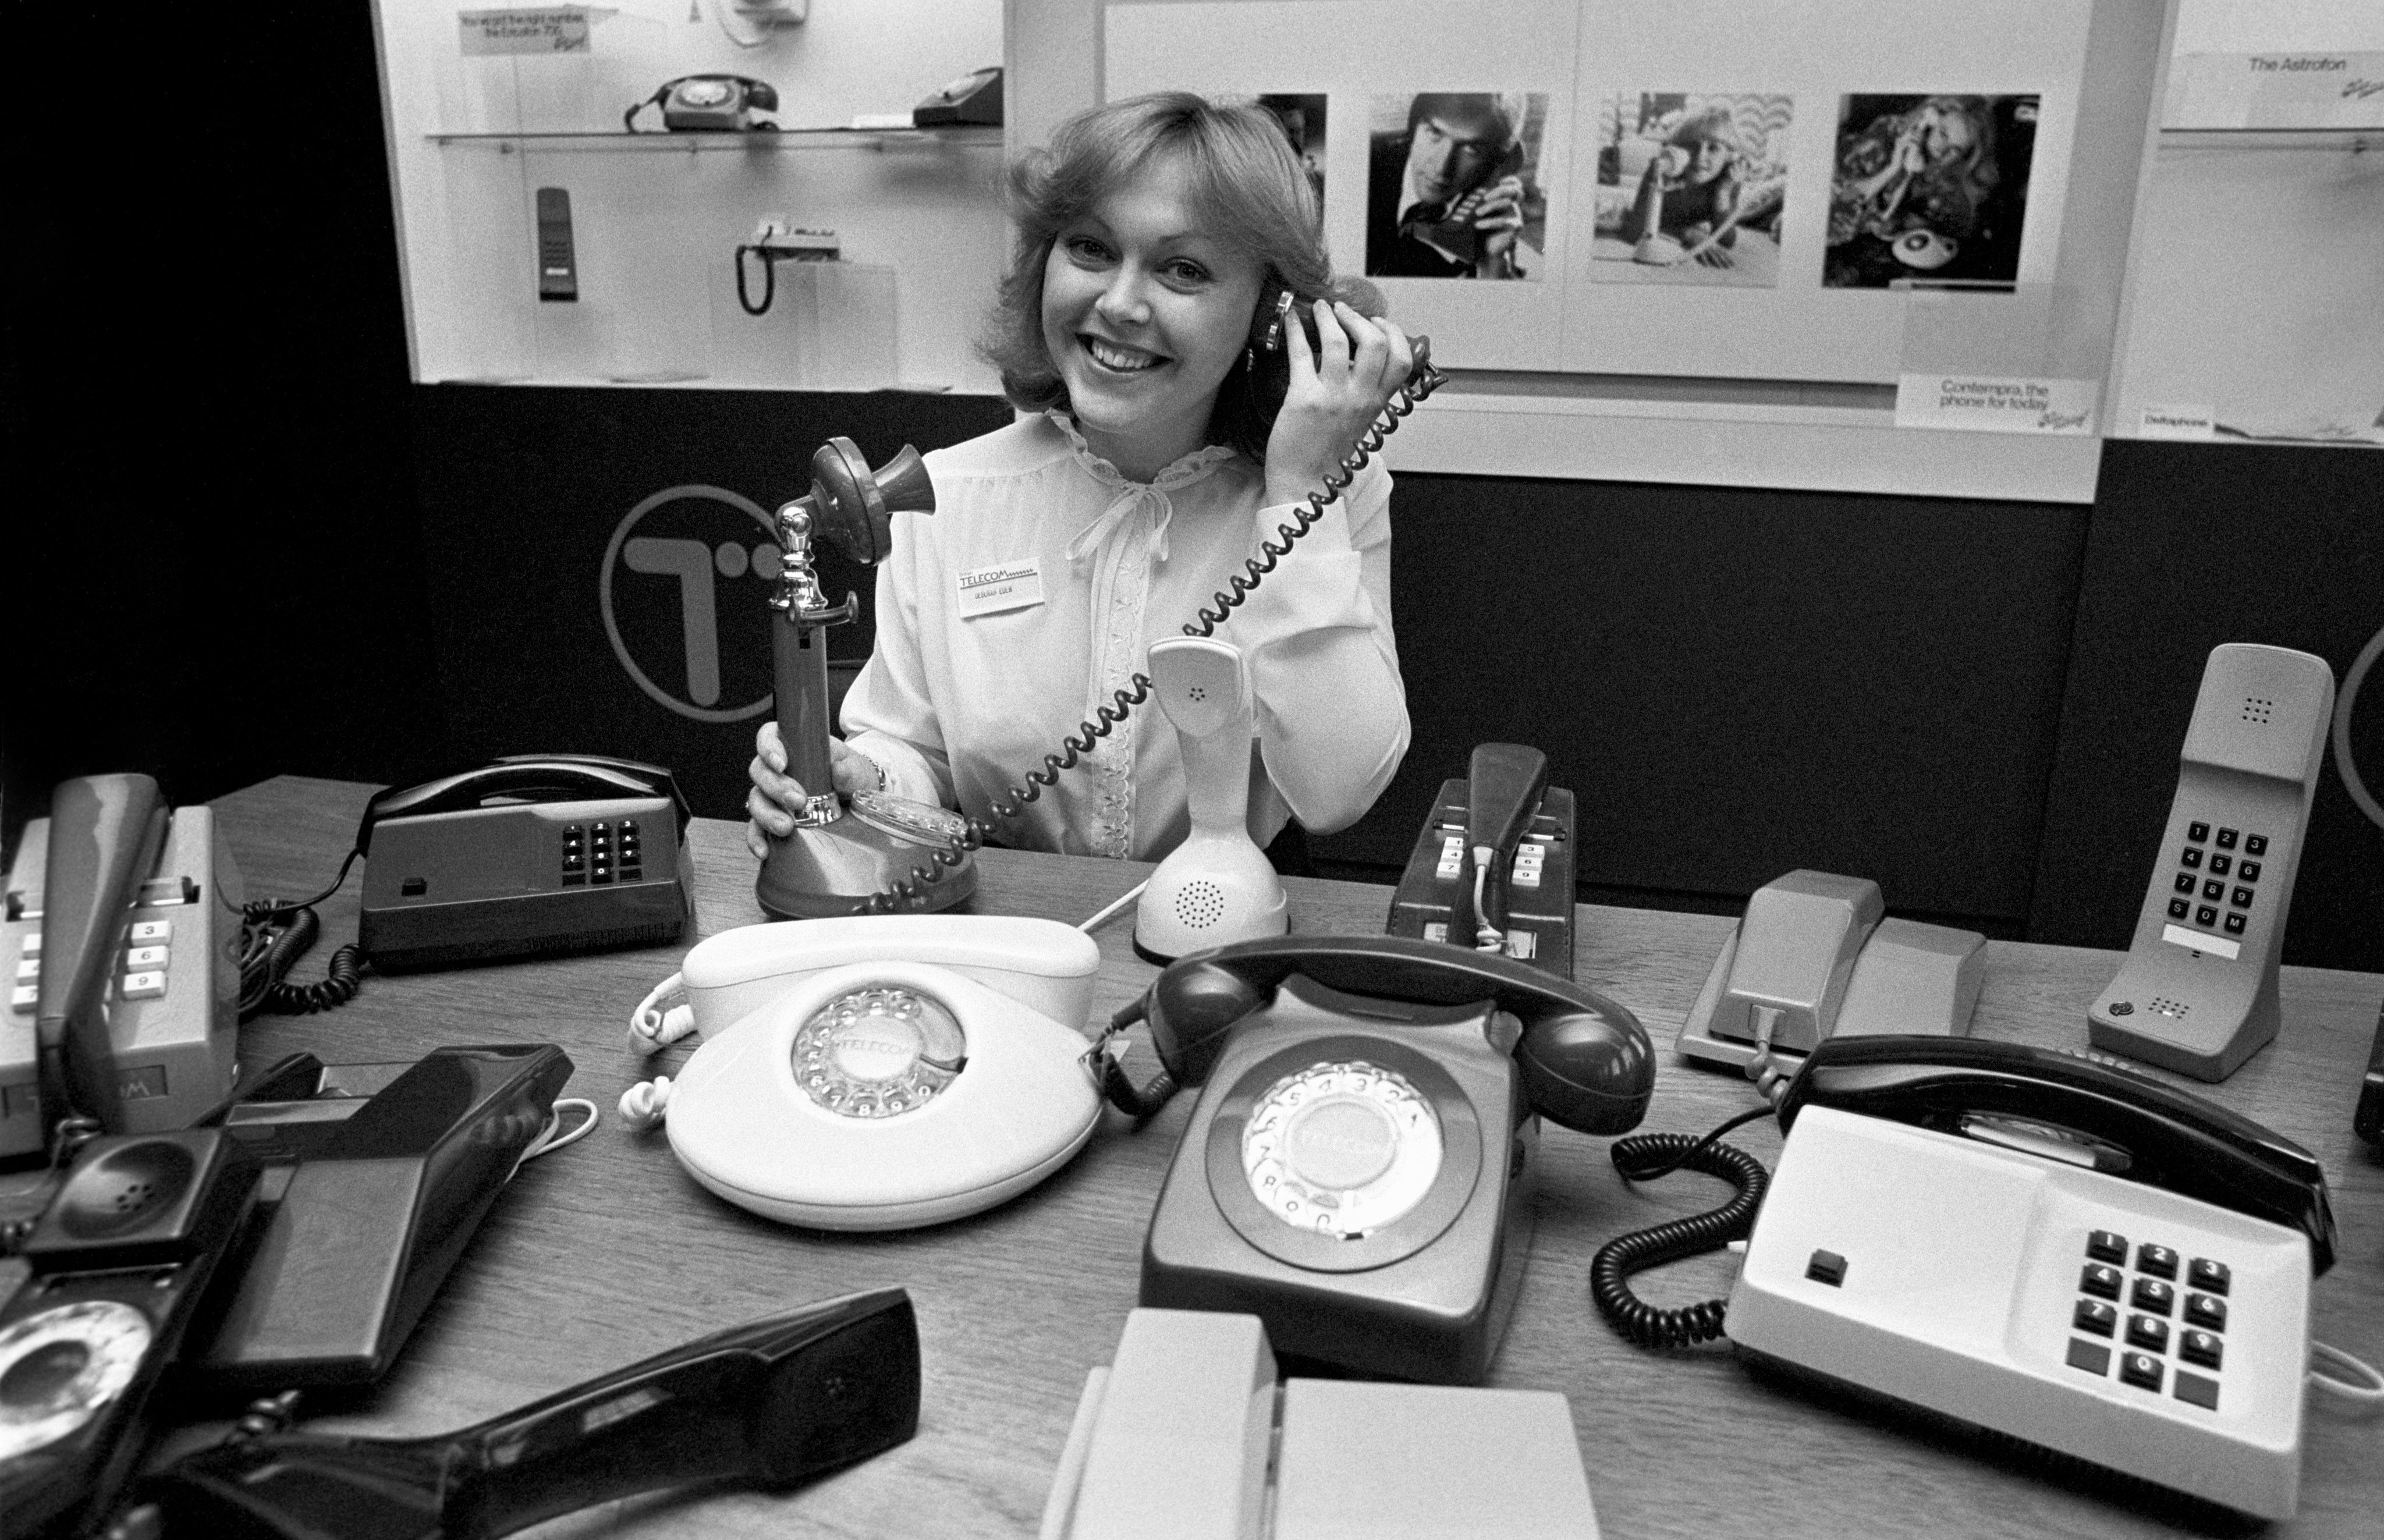 Sales officer Deborah Eden demonstrates the latest range of British Telecom telephones in November 1981 (PA)